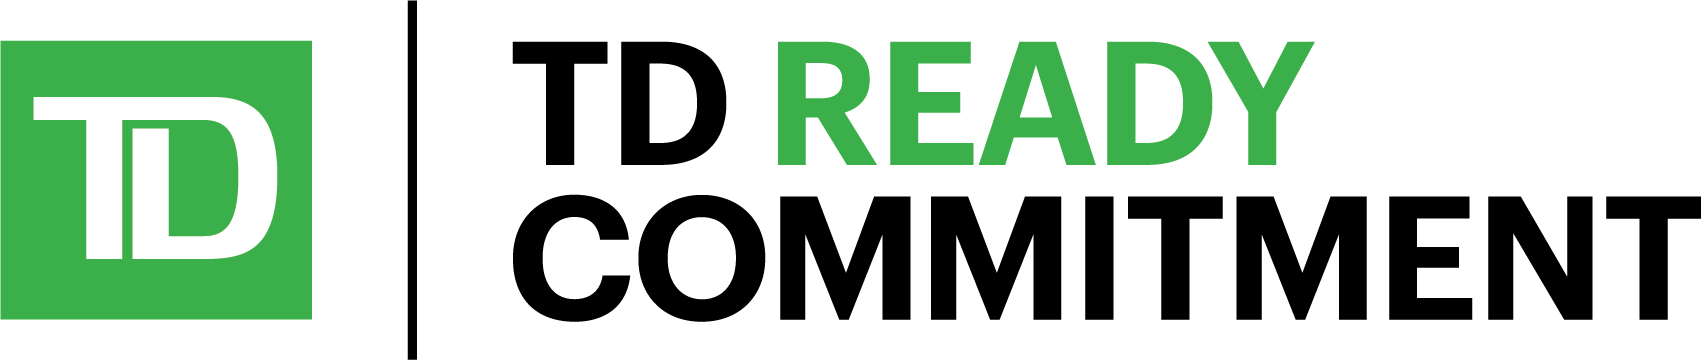 TD Ready commitment logo